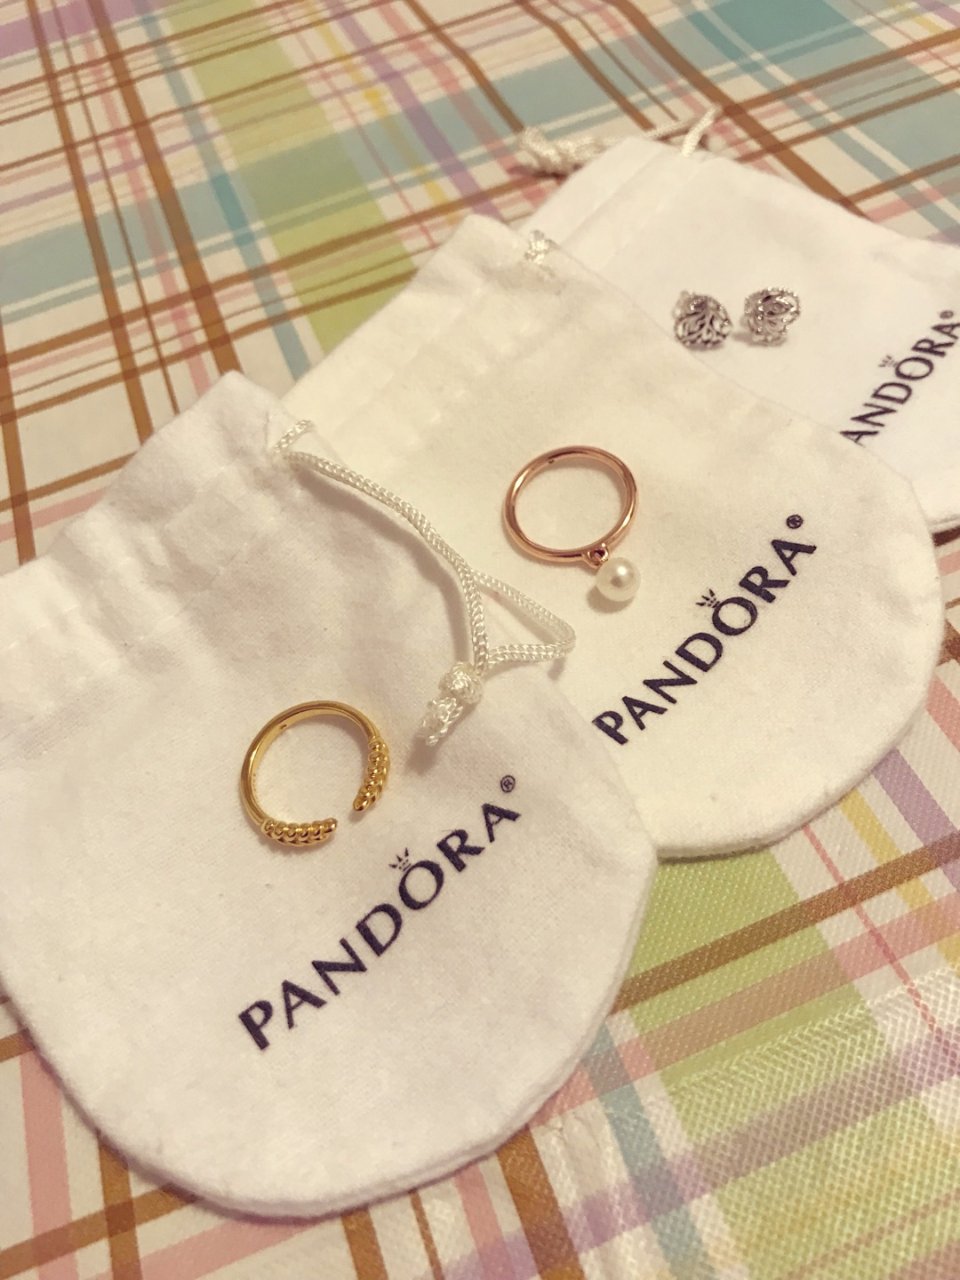 Pandora 潘多拉,潘多拉是个无底洞